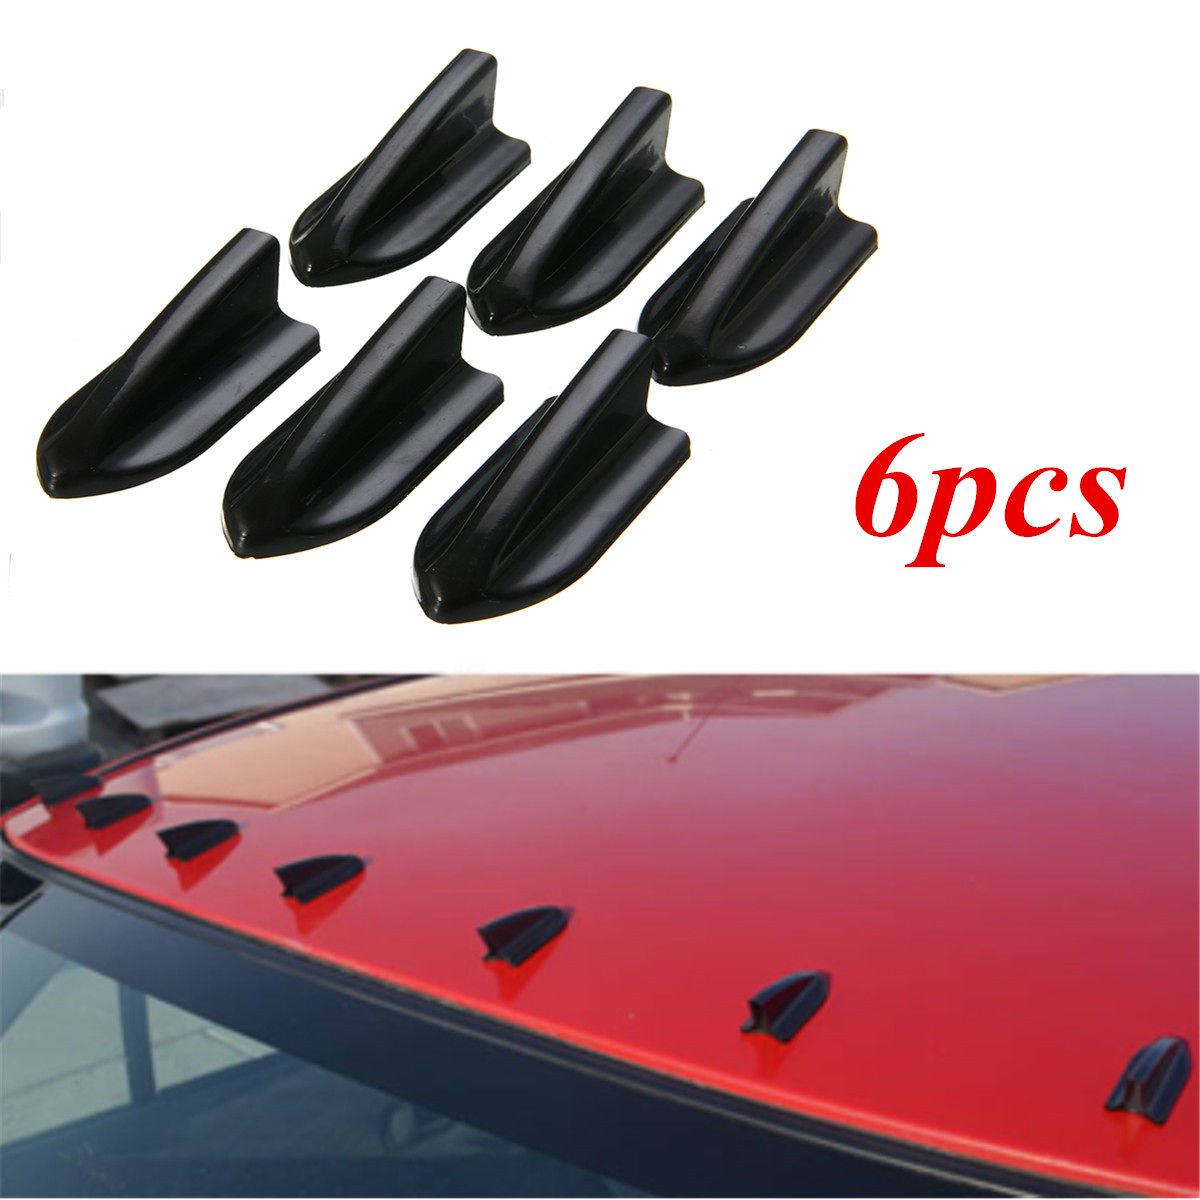 6pcs Universal Car Antennas Black PP Roof Shark Fins Spoiler Wing Kit Vortex Generator Car Styling